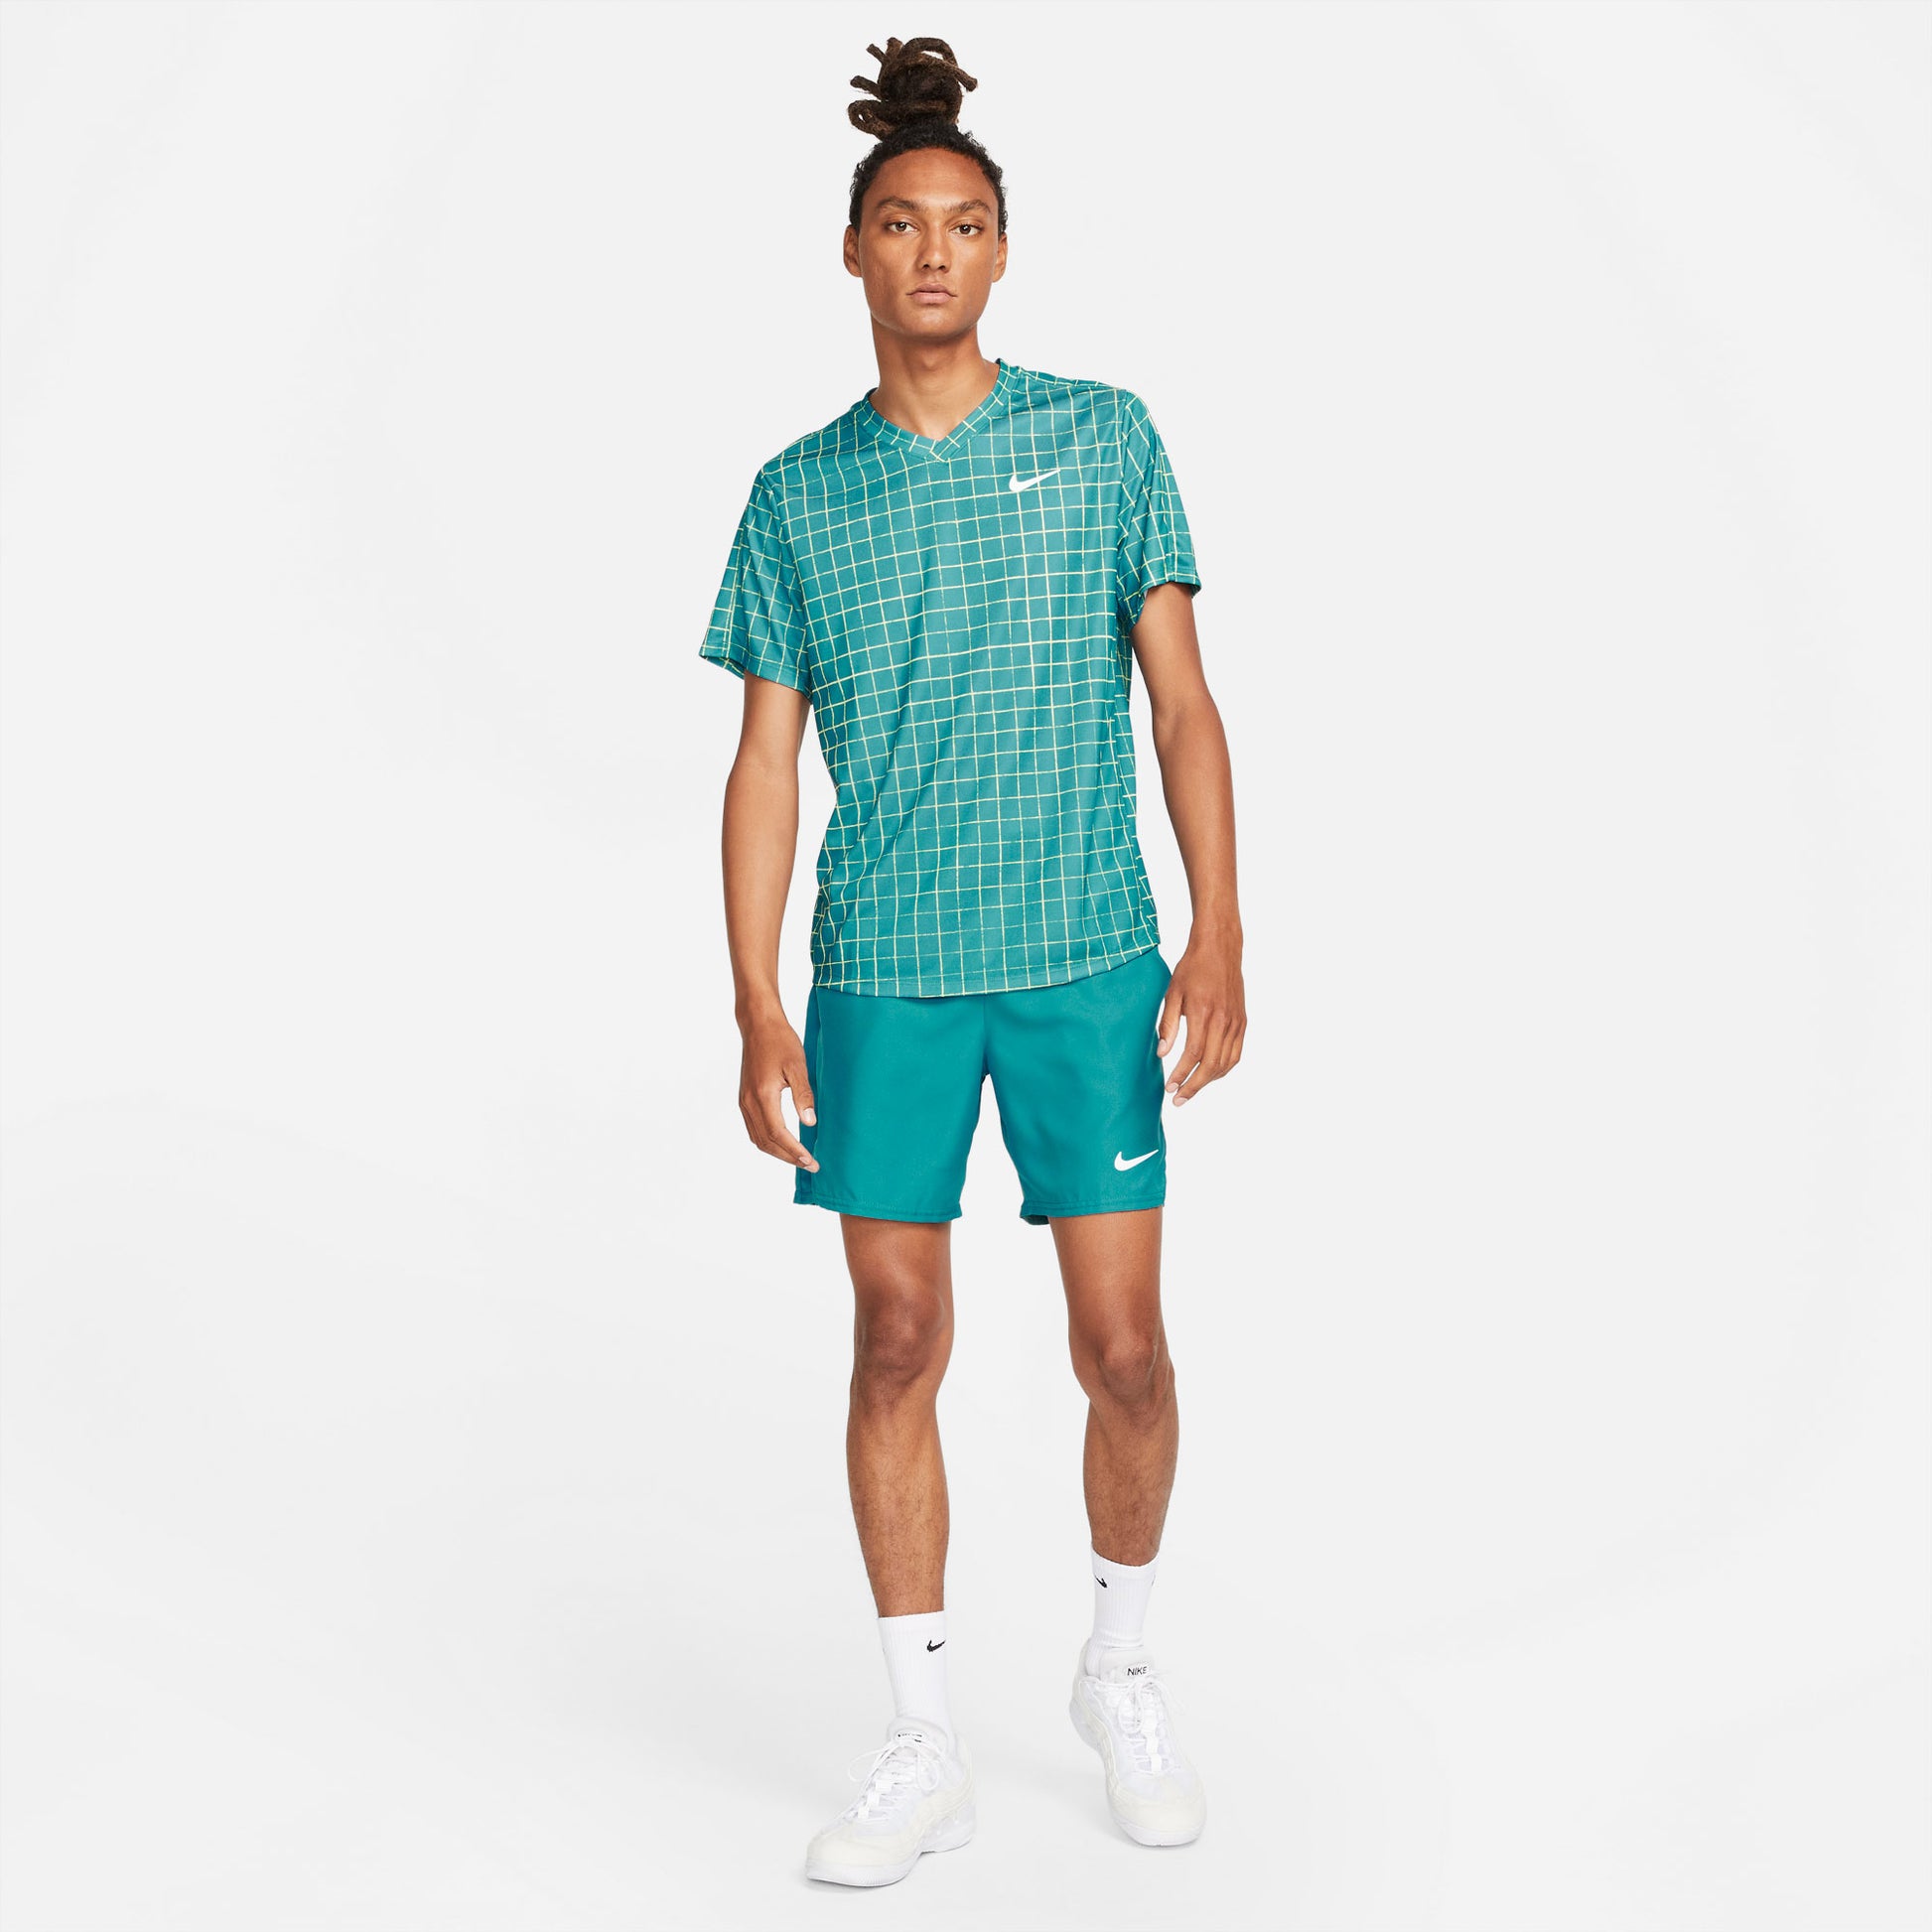 Nike Dri-FIT Victory Men's Tennis Shirt Blue (3)